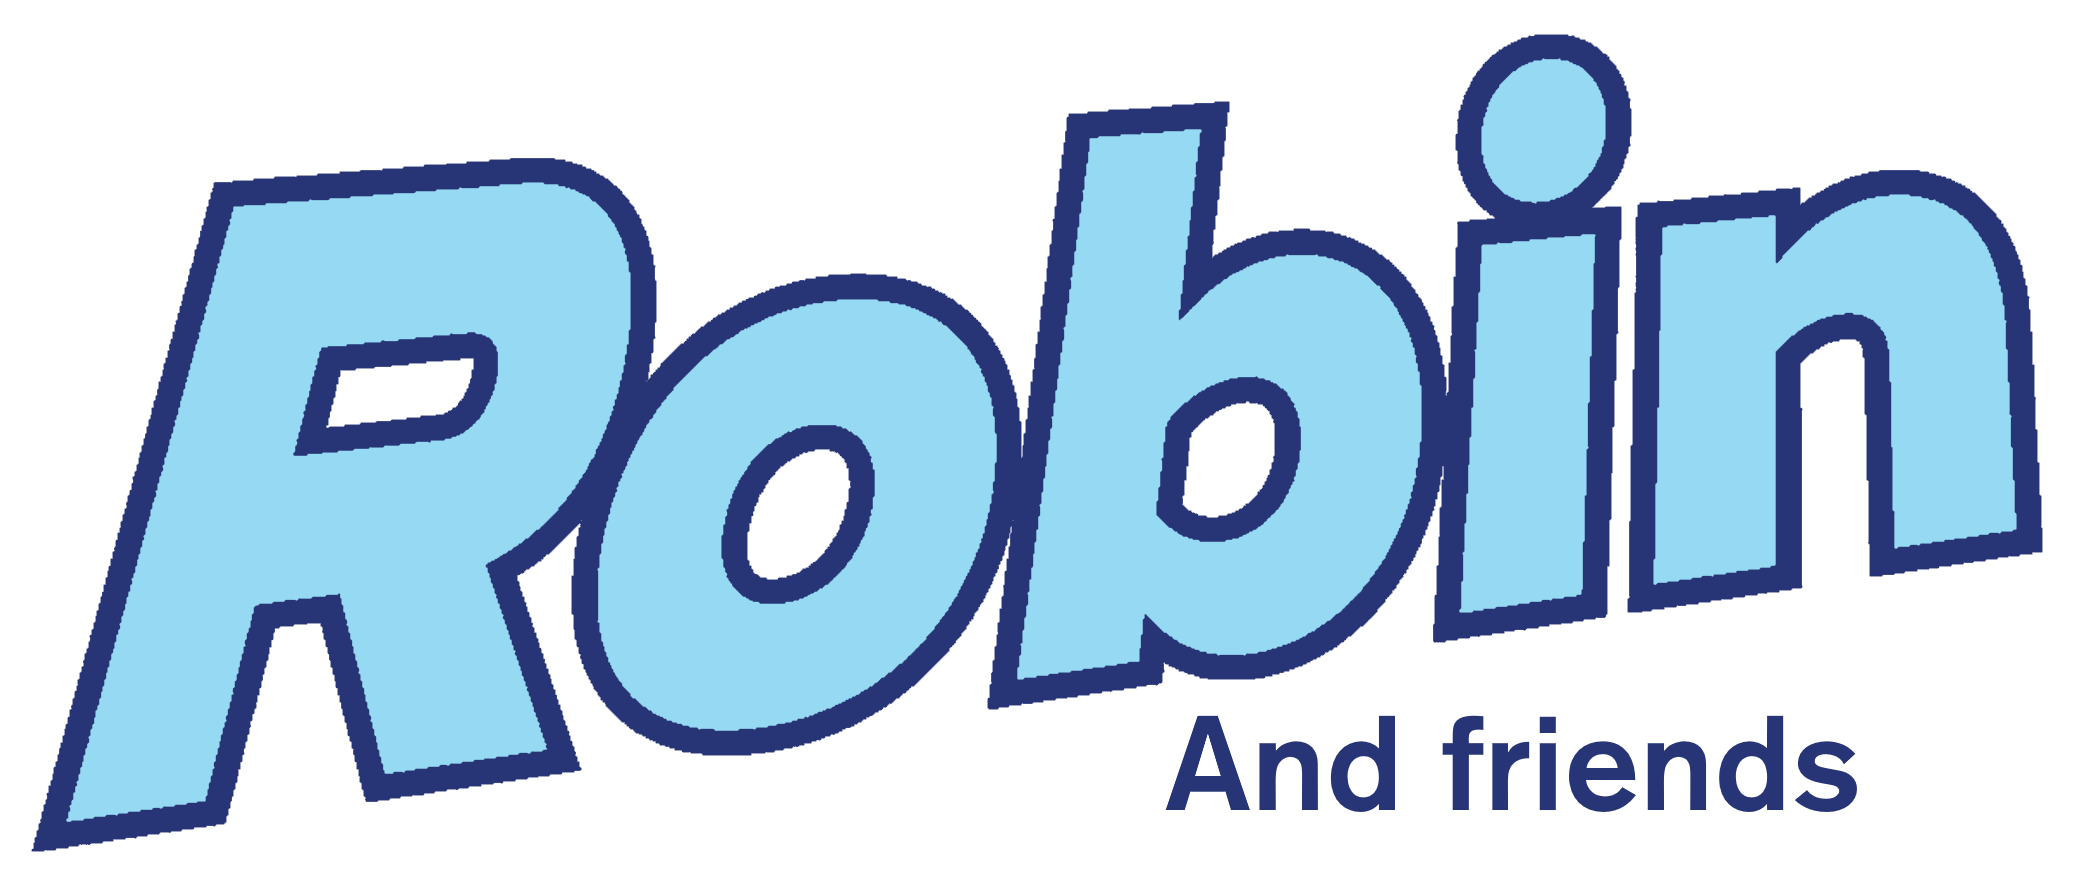 Robin and Friends Logo by jesnoyers on DeviantArt